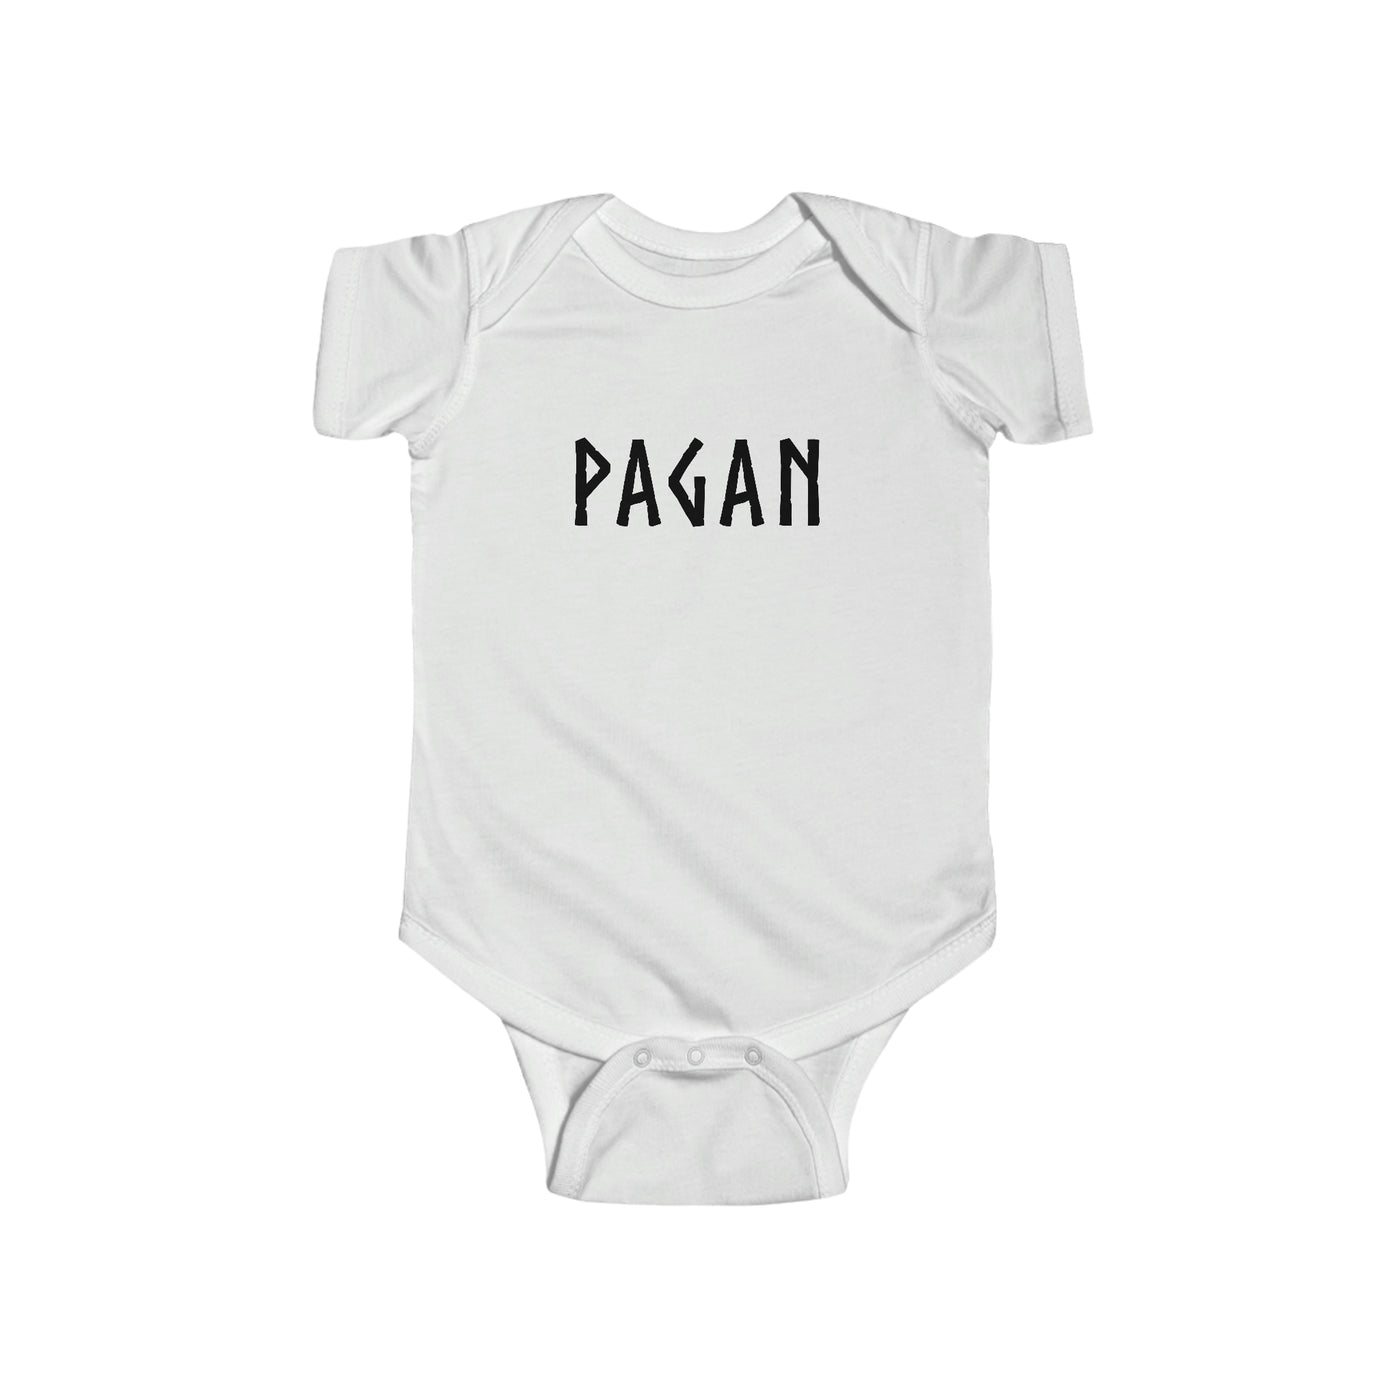 Pagan Baby Bodysuit